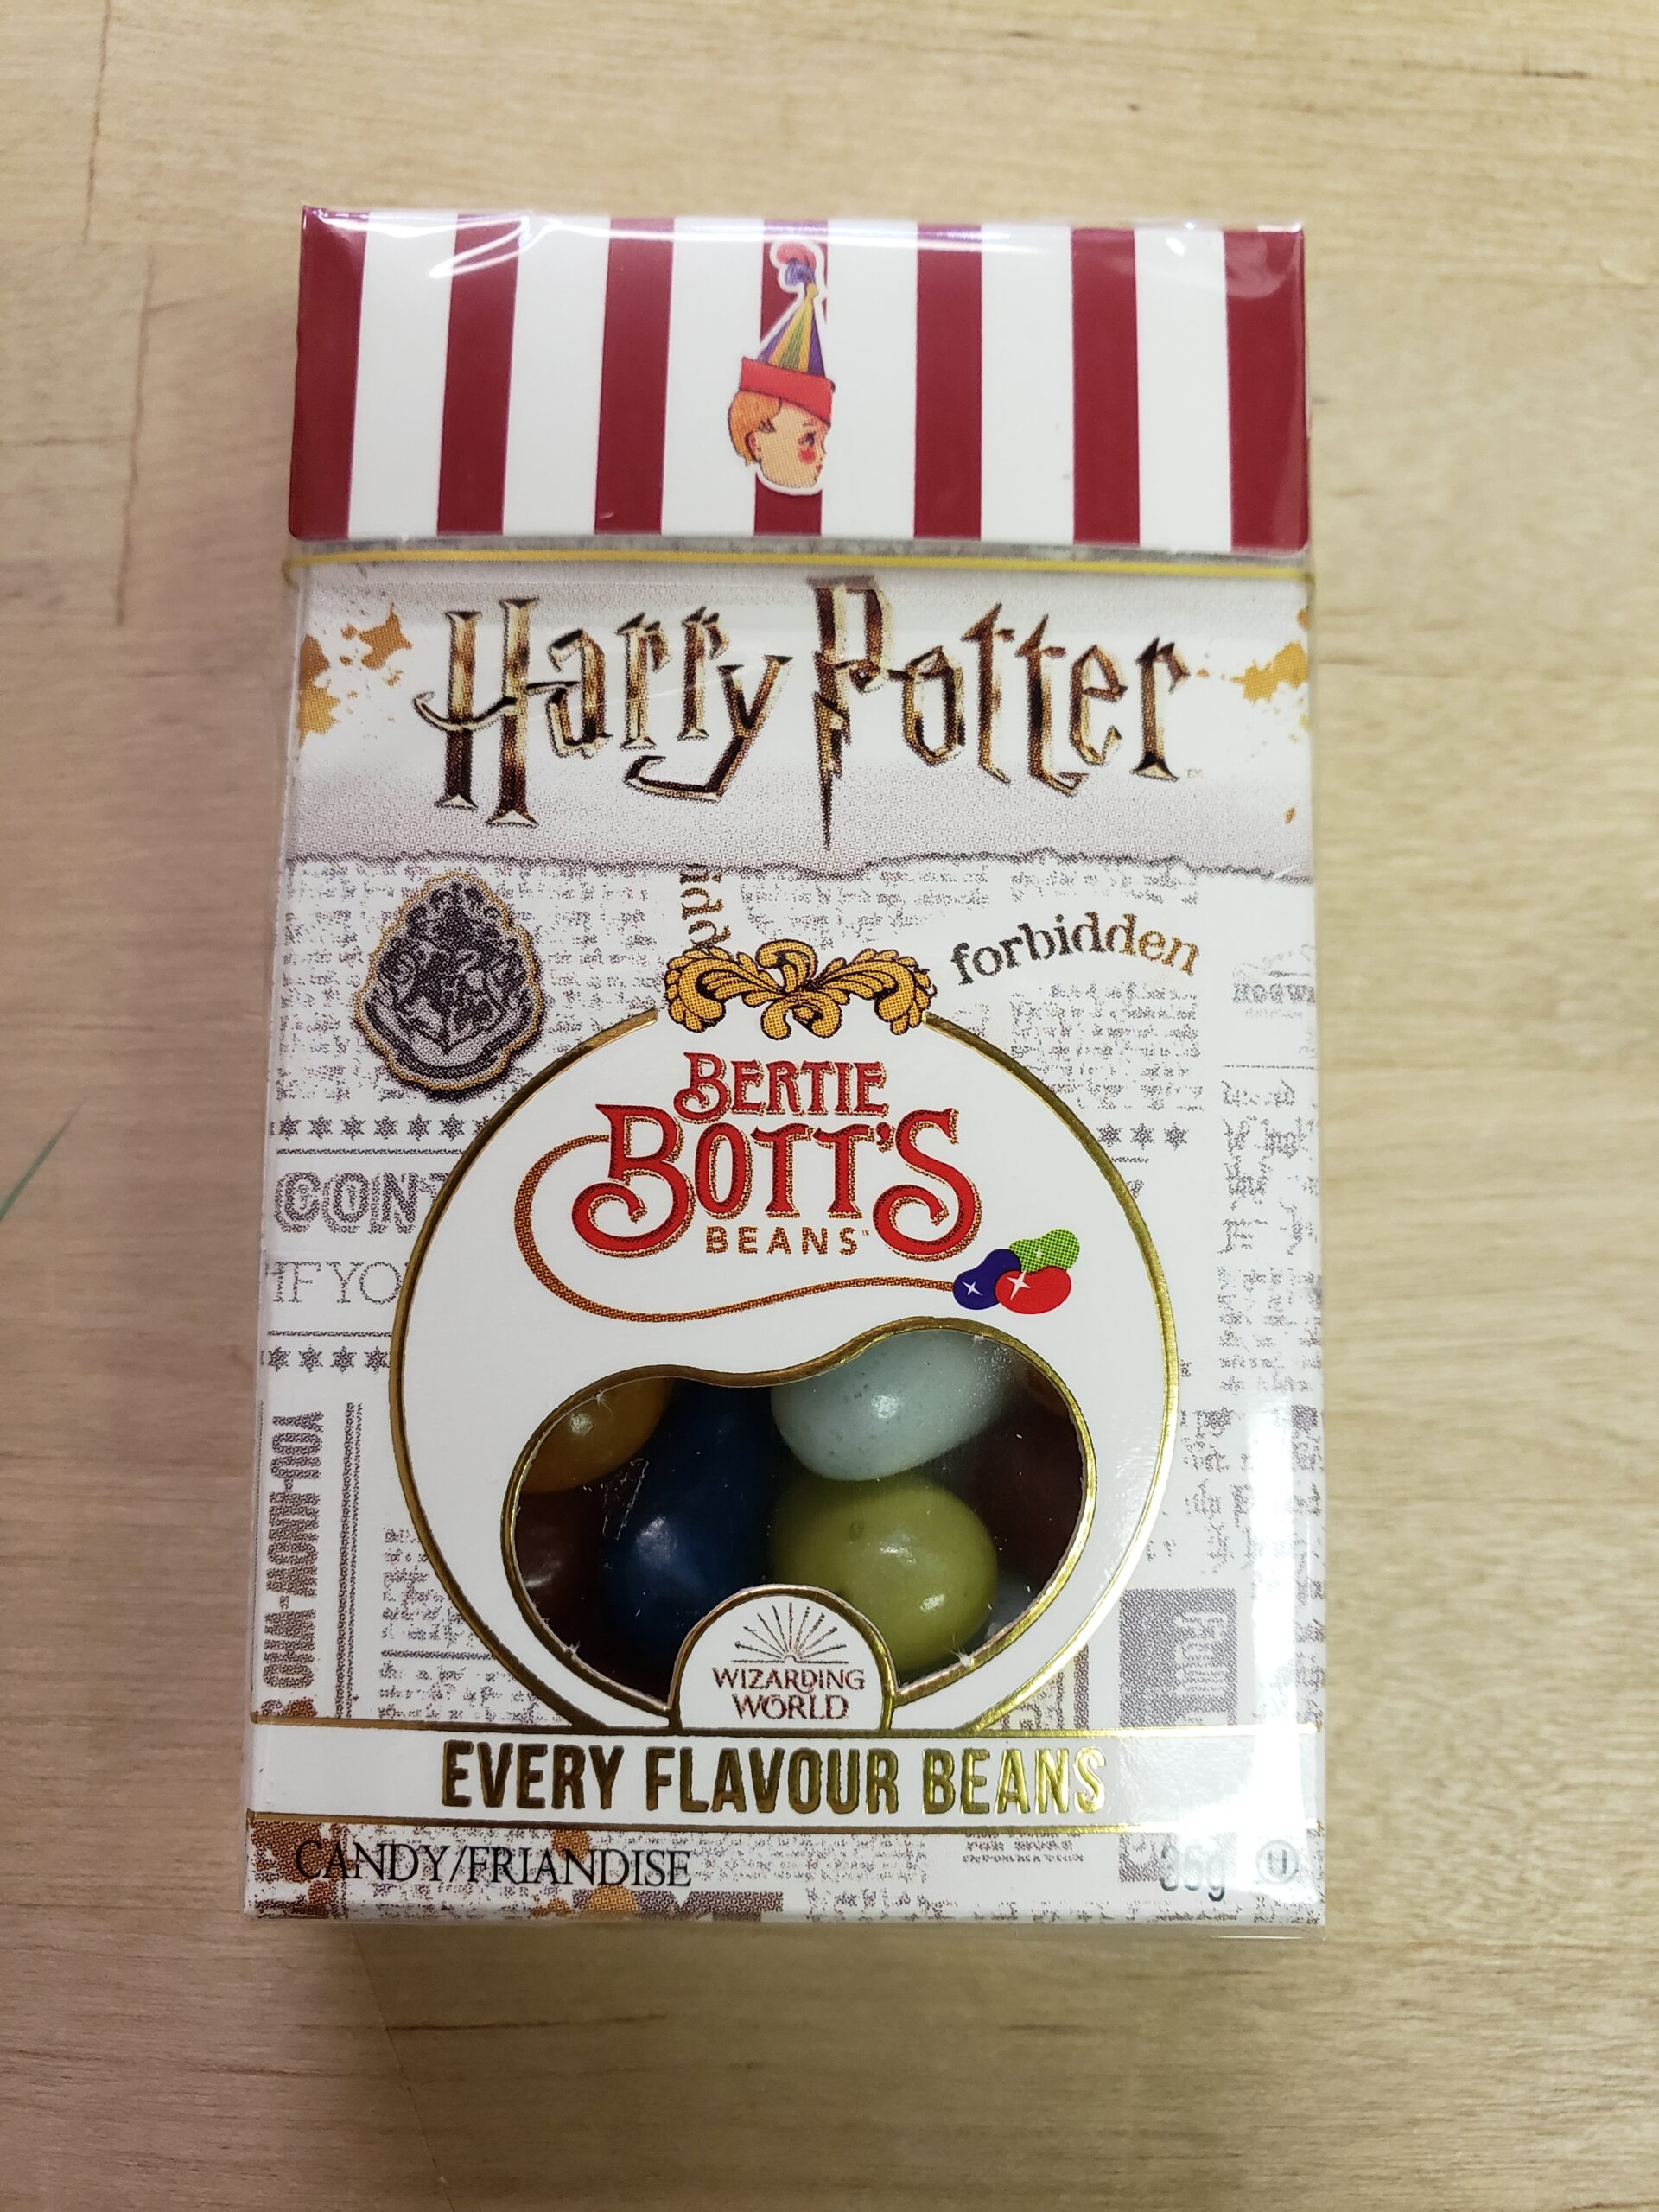 Jelly Belly Beans Harry Potter Bertie Bott's Box Small